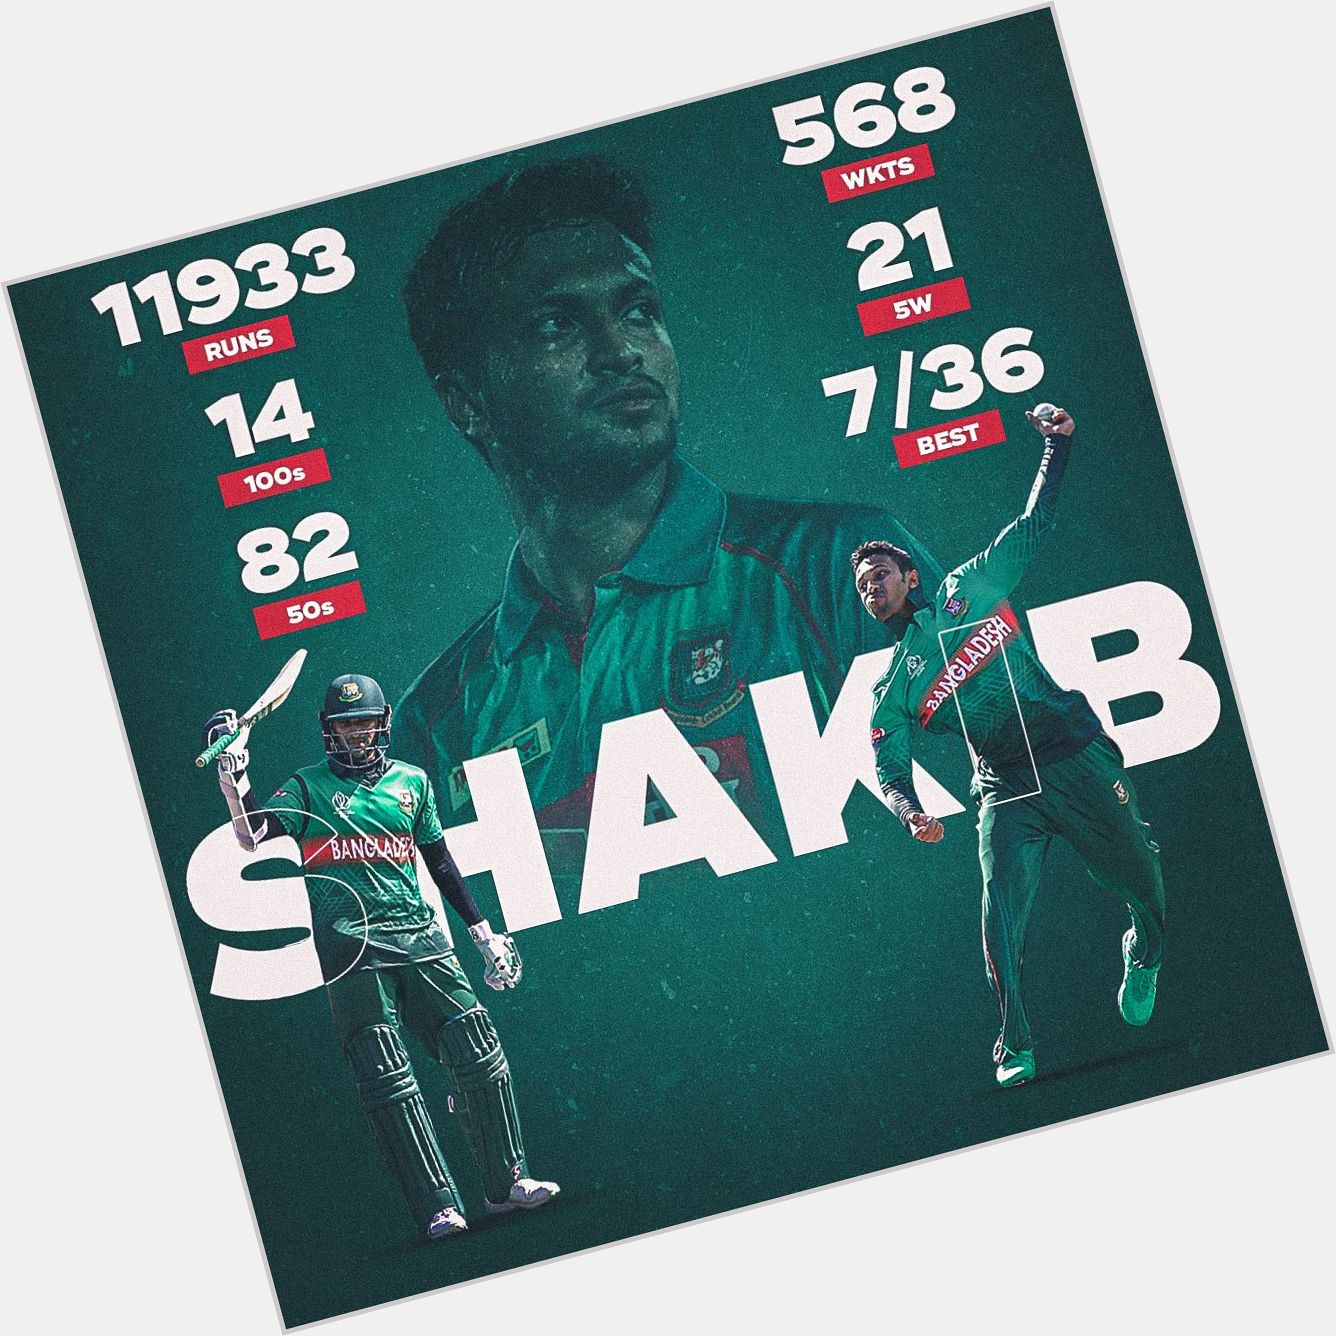 Happy birthday to Poster Boy of Bangladesh Cricket, Shakib Al Hasan 